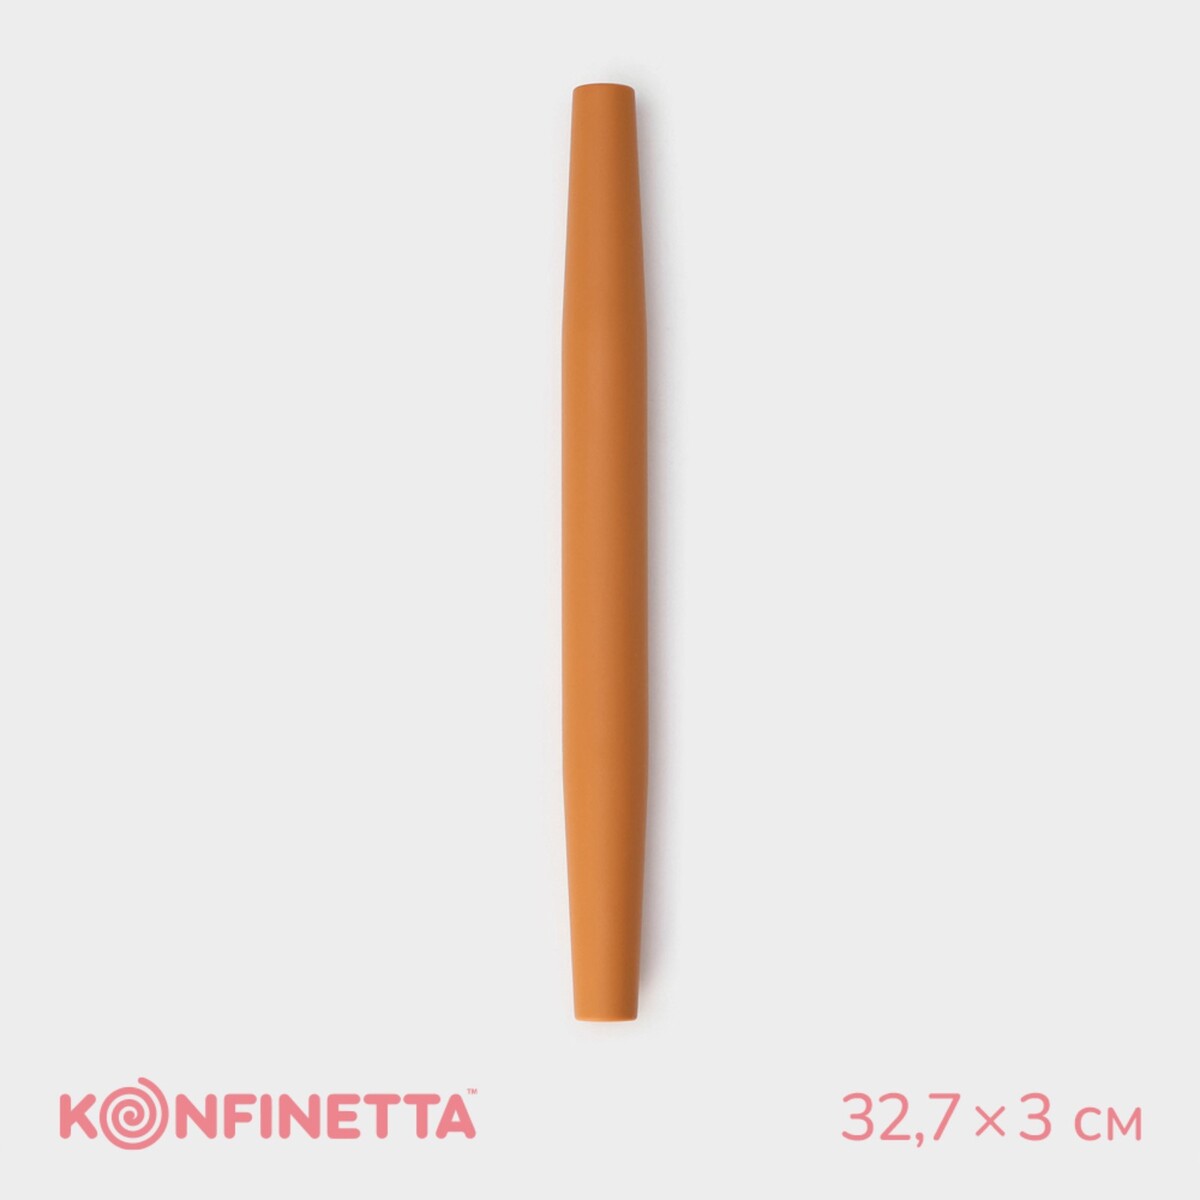 Скалка konfinetta, силикон, 32,7×3×3 см, цвет бежевый